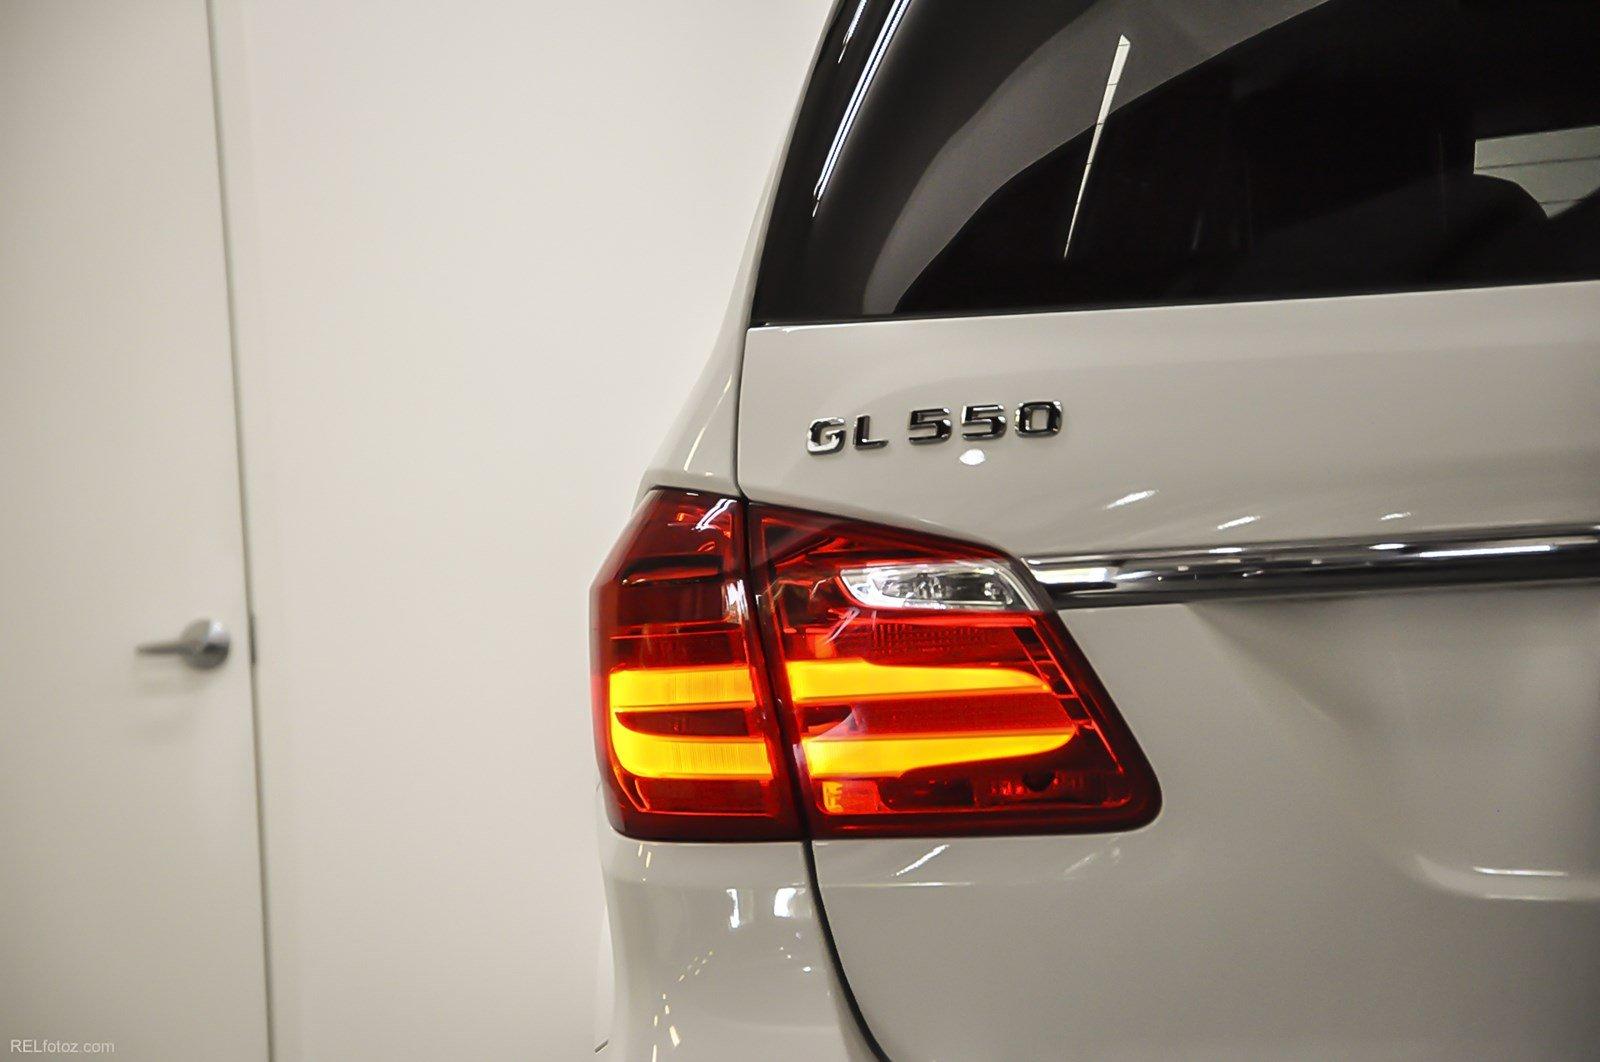 Used 2014 Mercedes-Benz GL-Class GL 550 for sale Sold at Gravity Autos Marietta in Marietta GA 30060 6